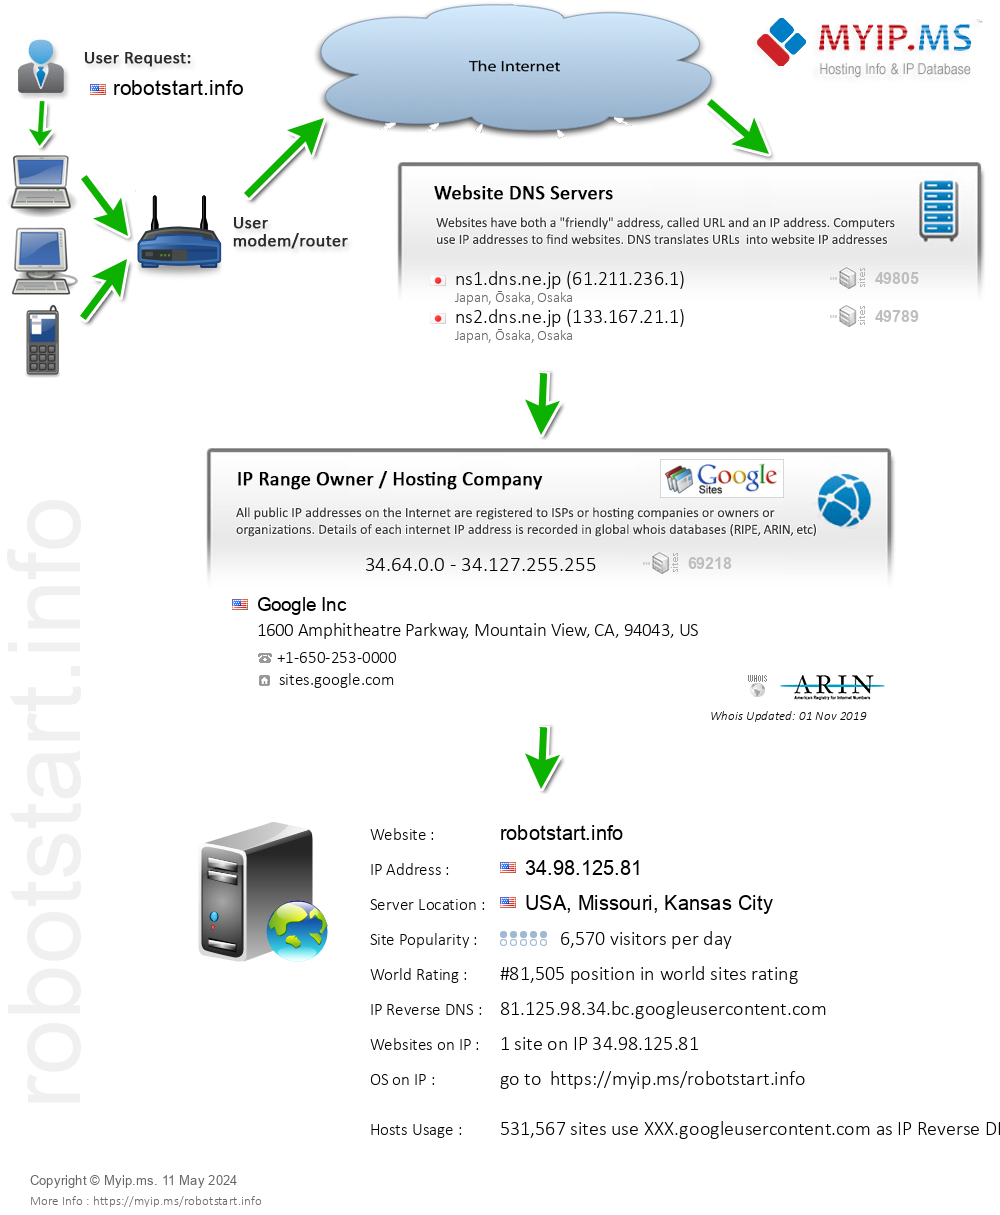 Robotstart.info - Website Hosting Visual IP Diagram